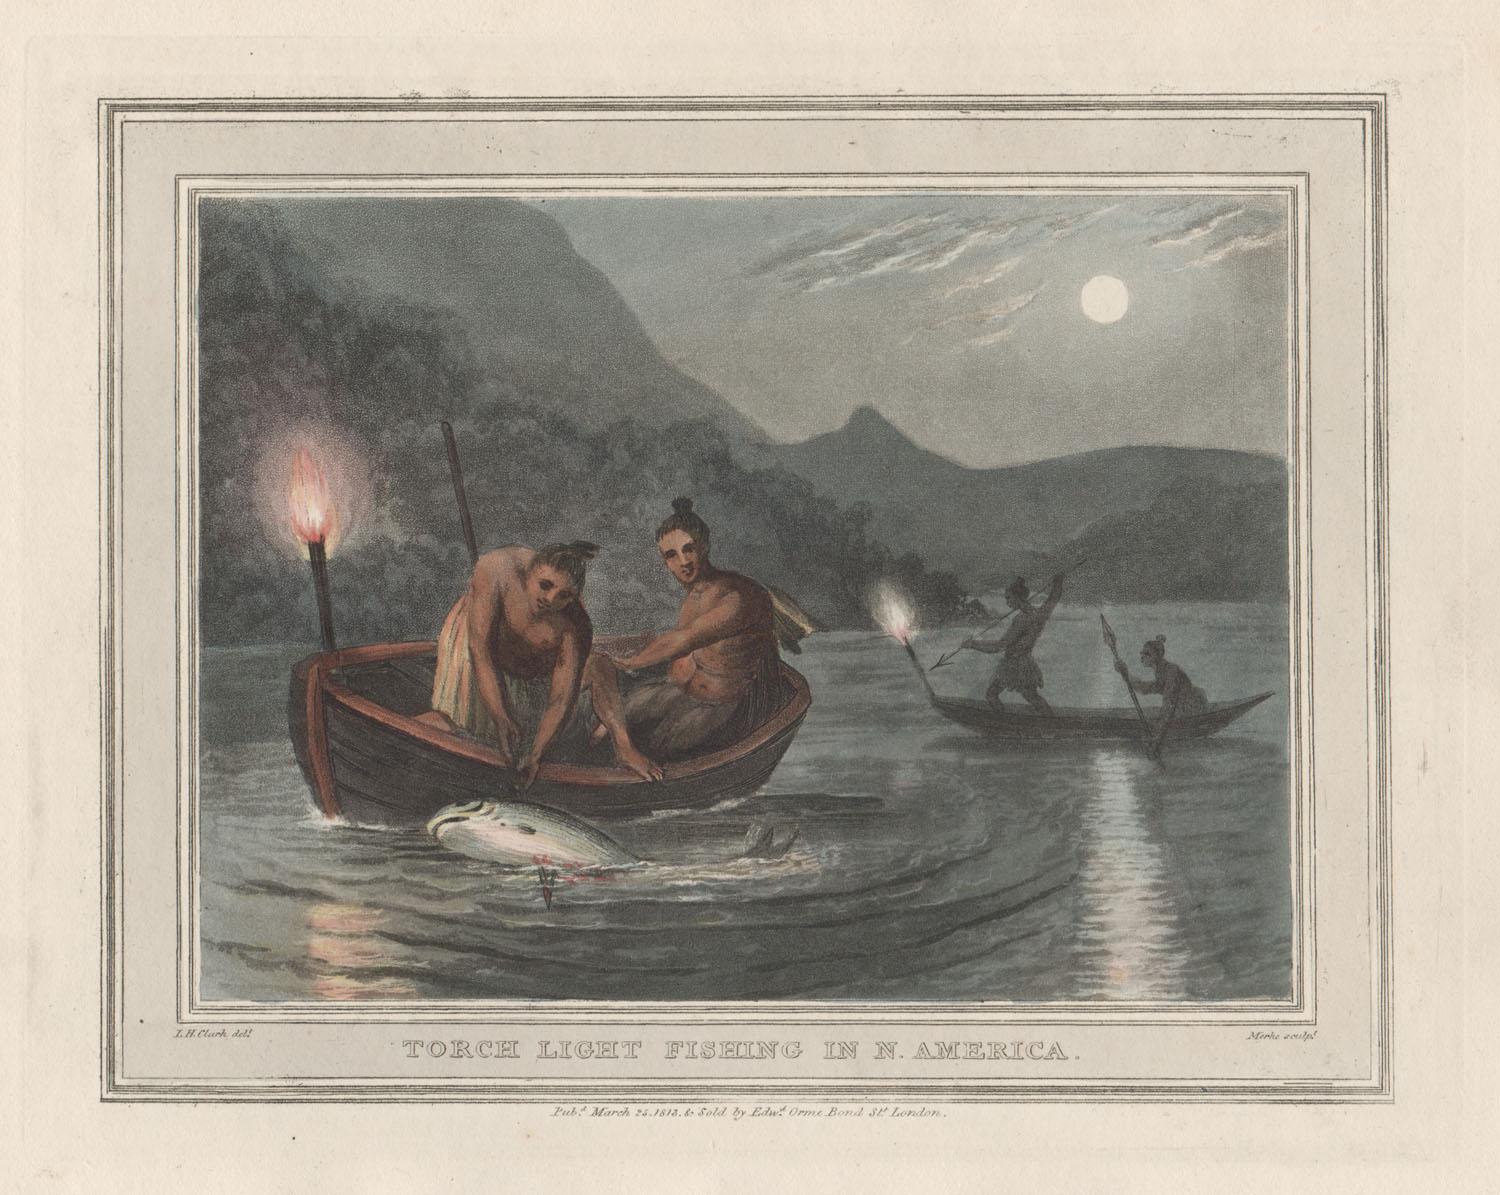 Samuel Howitt Animal Print - Torch Light Fishing in N America, aquatint engraving hunting print, 1813